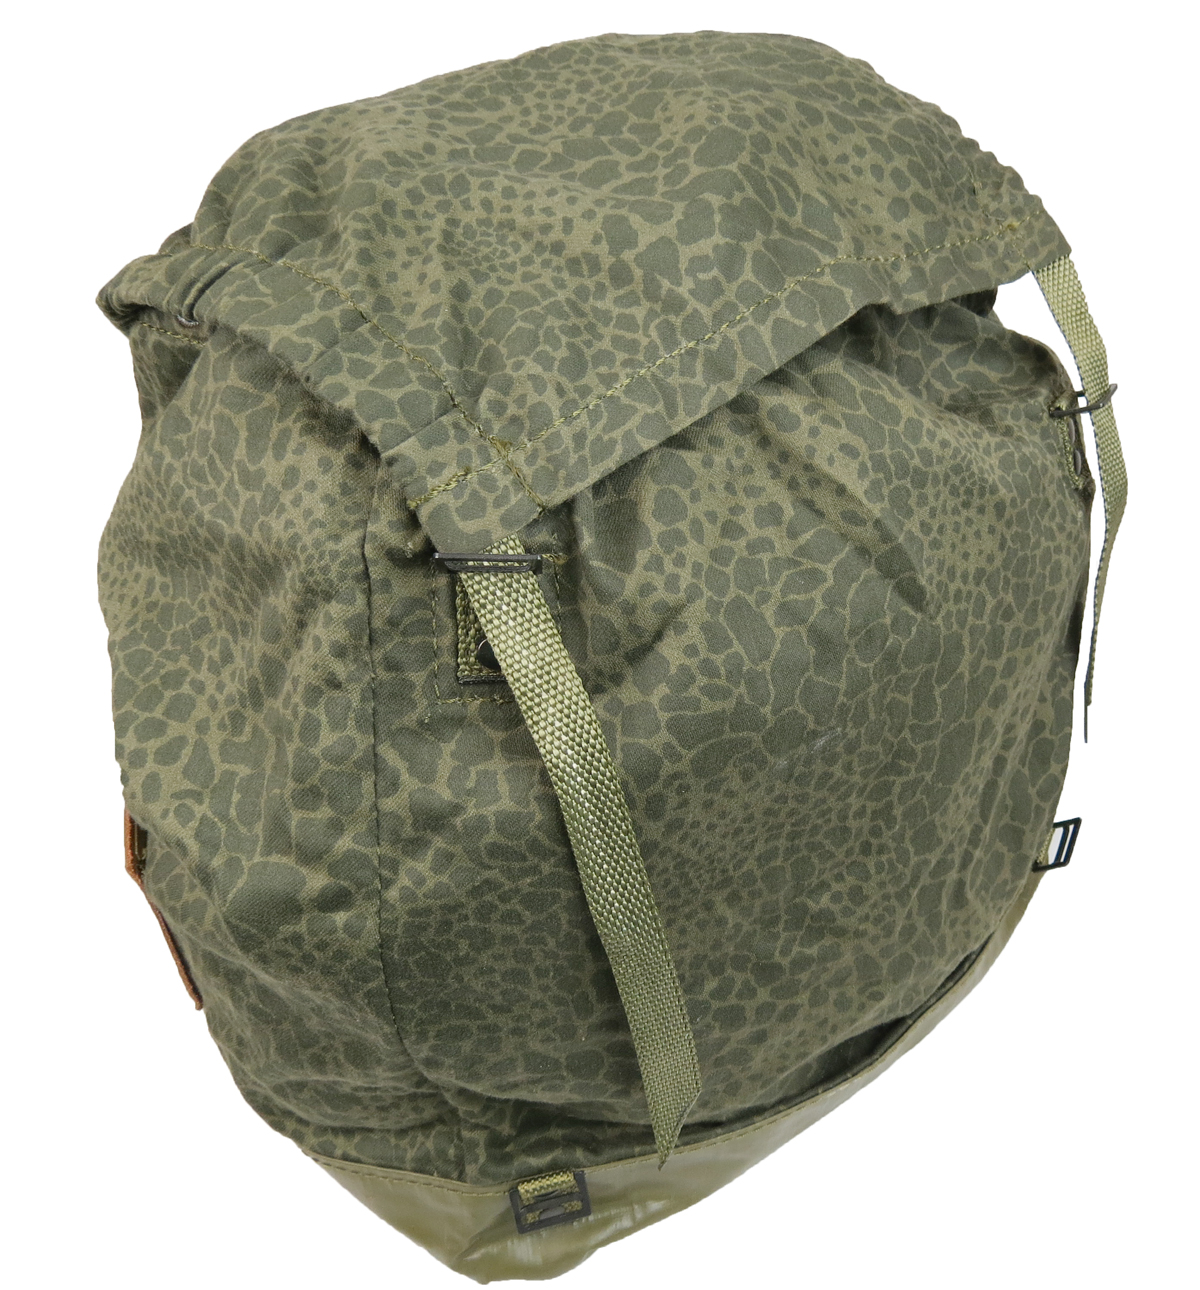 puma camouflage backpack